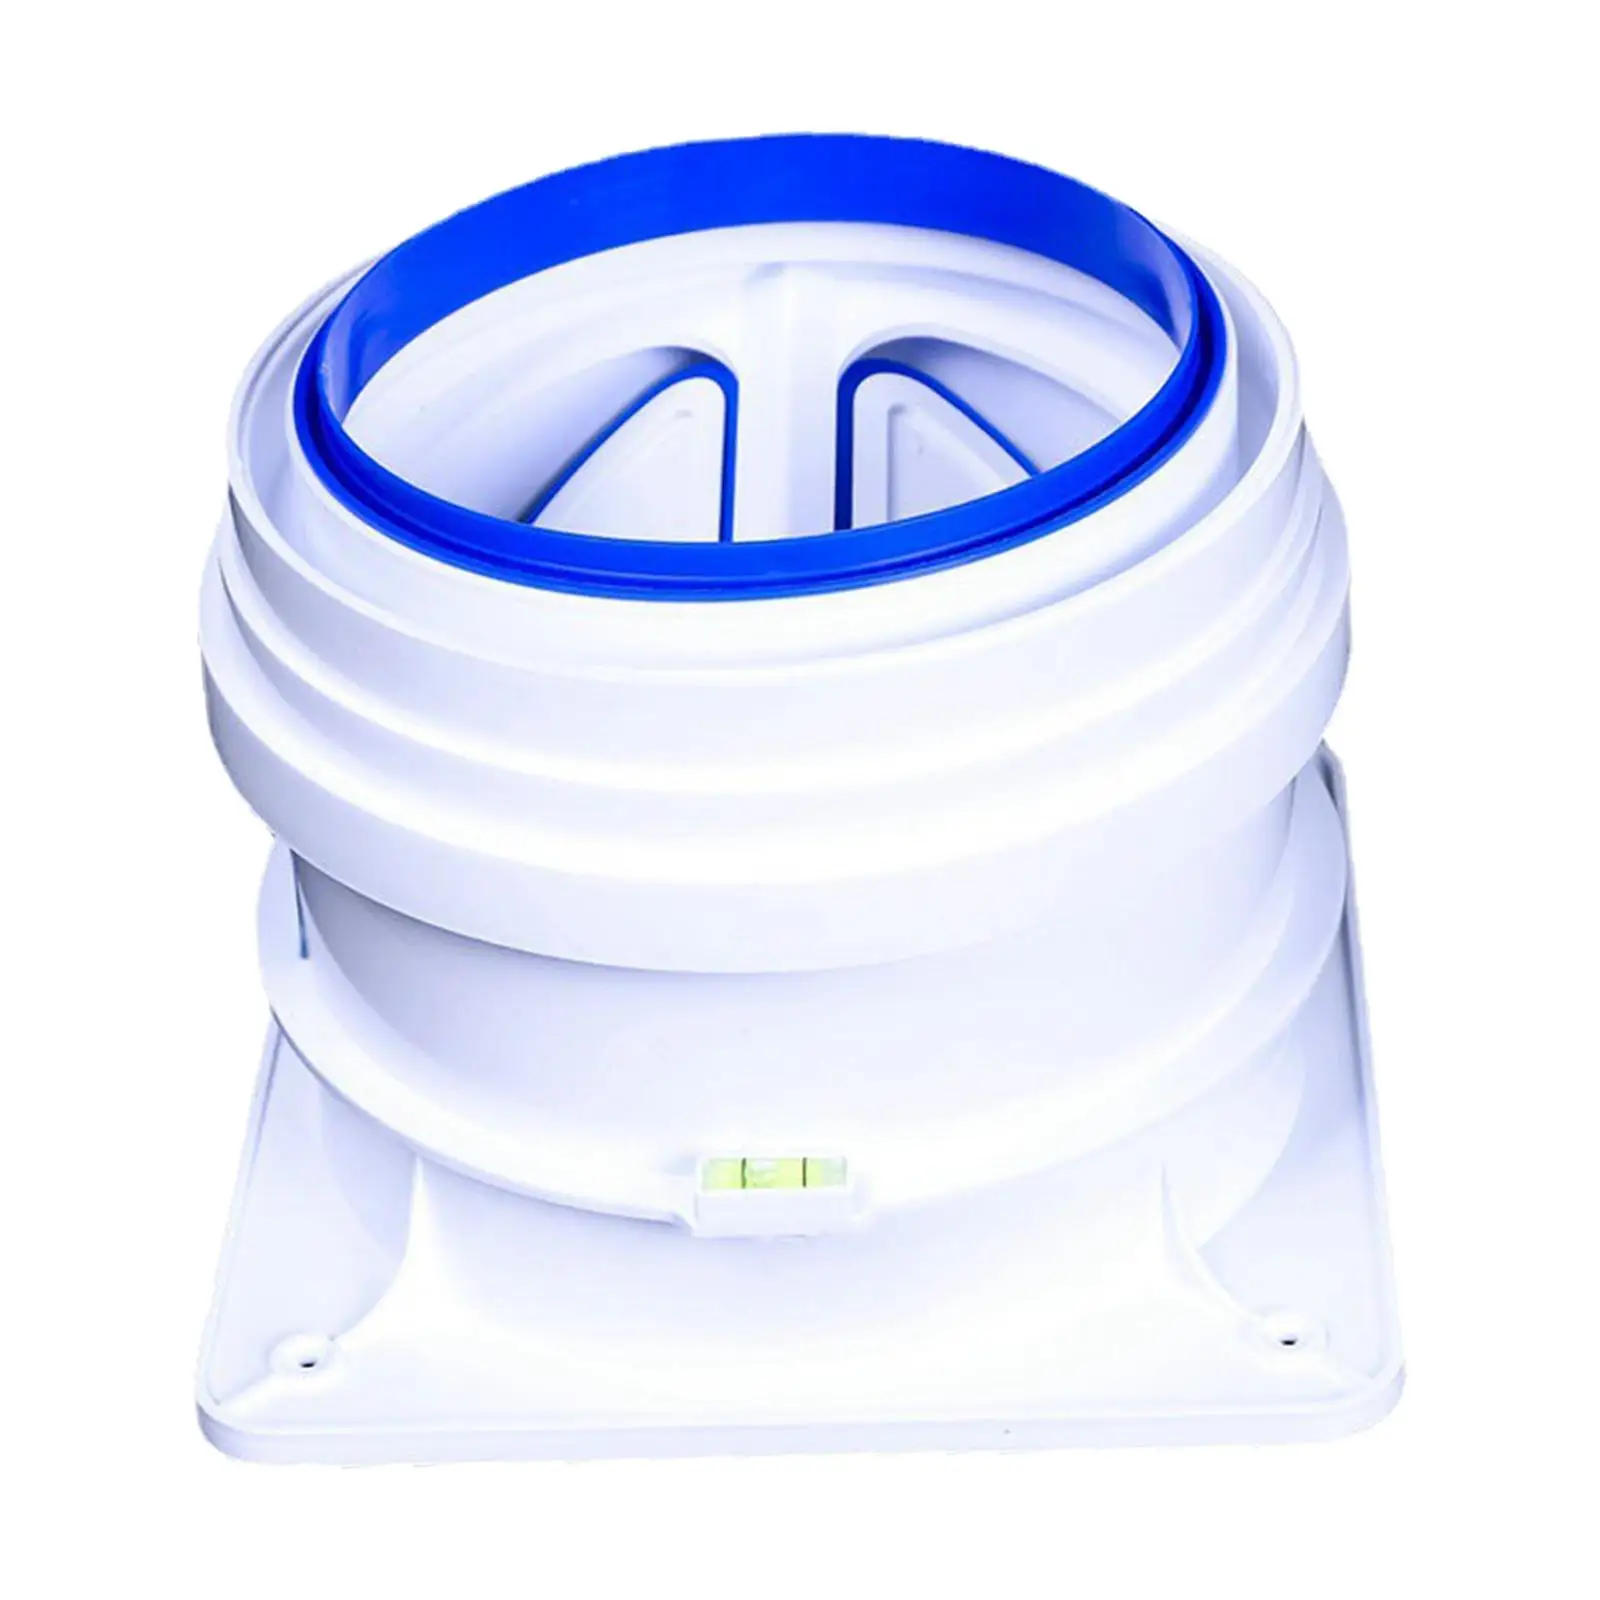 Backdraft Damper Draft Blocker Vent Odor Resistant Durable Bathroom Check Valve Hood Check Valve Flue Check Valve for Air Outlet